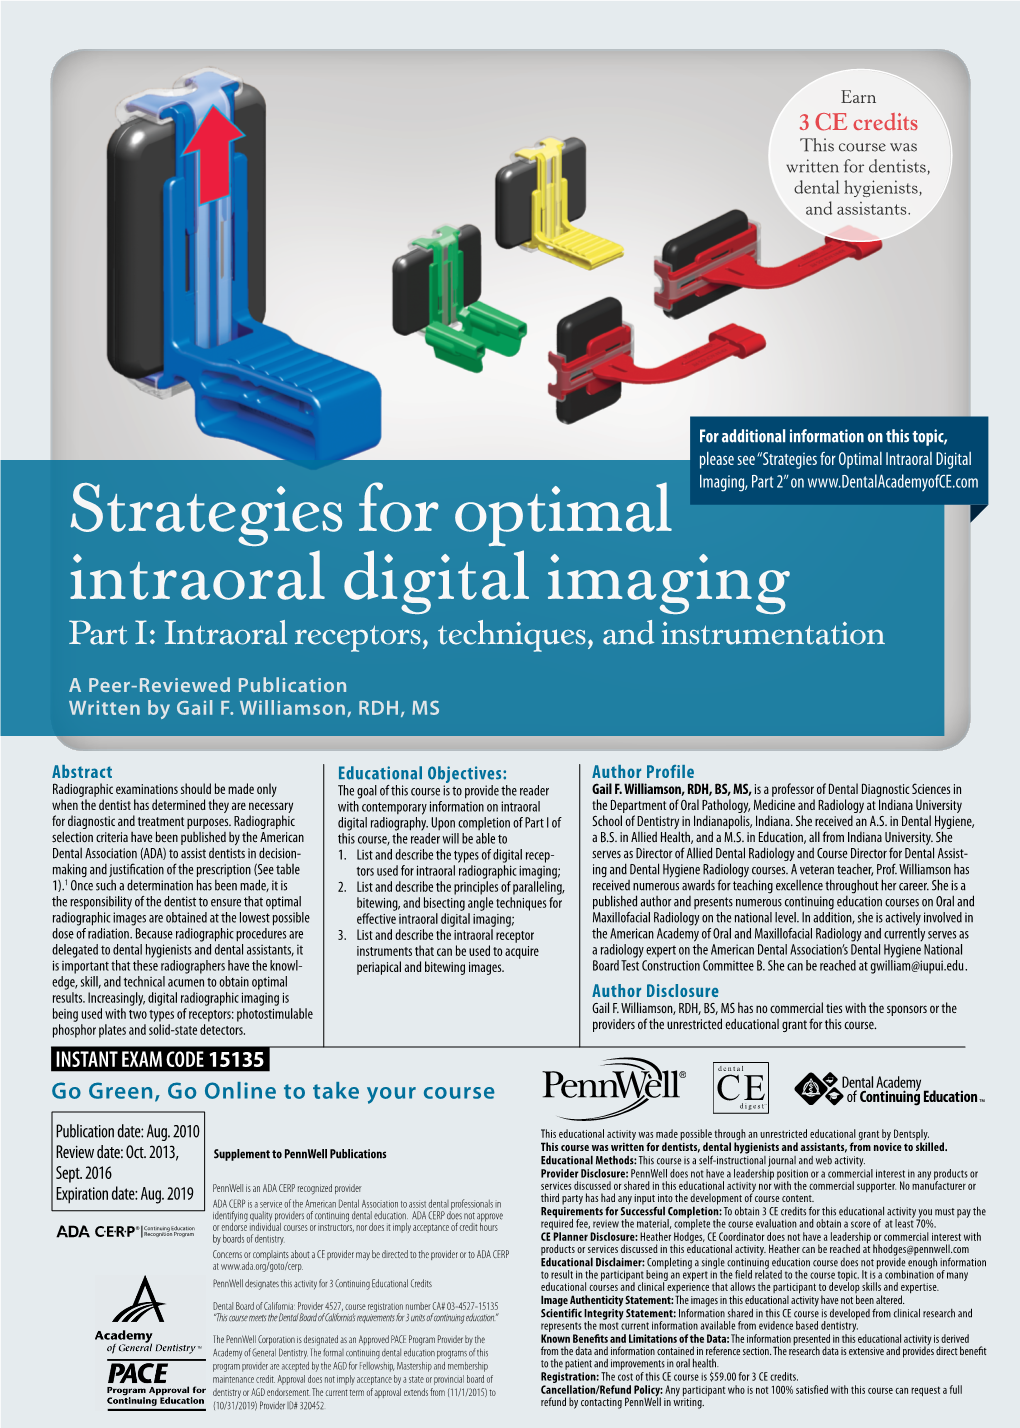 Strategies for Optimal Intraoral Digital Imaging Part I: Intraoral Receptors, Techniques, and Instrumentation